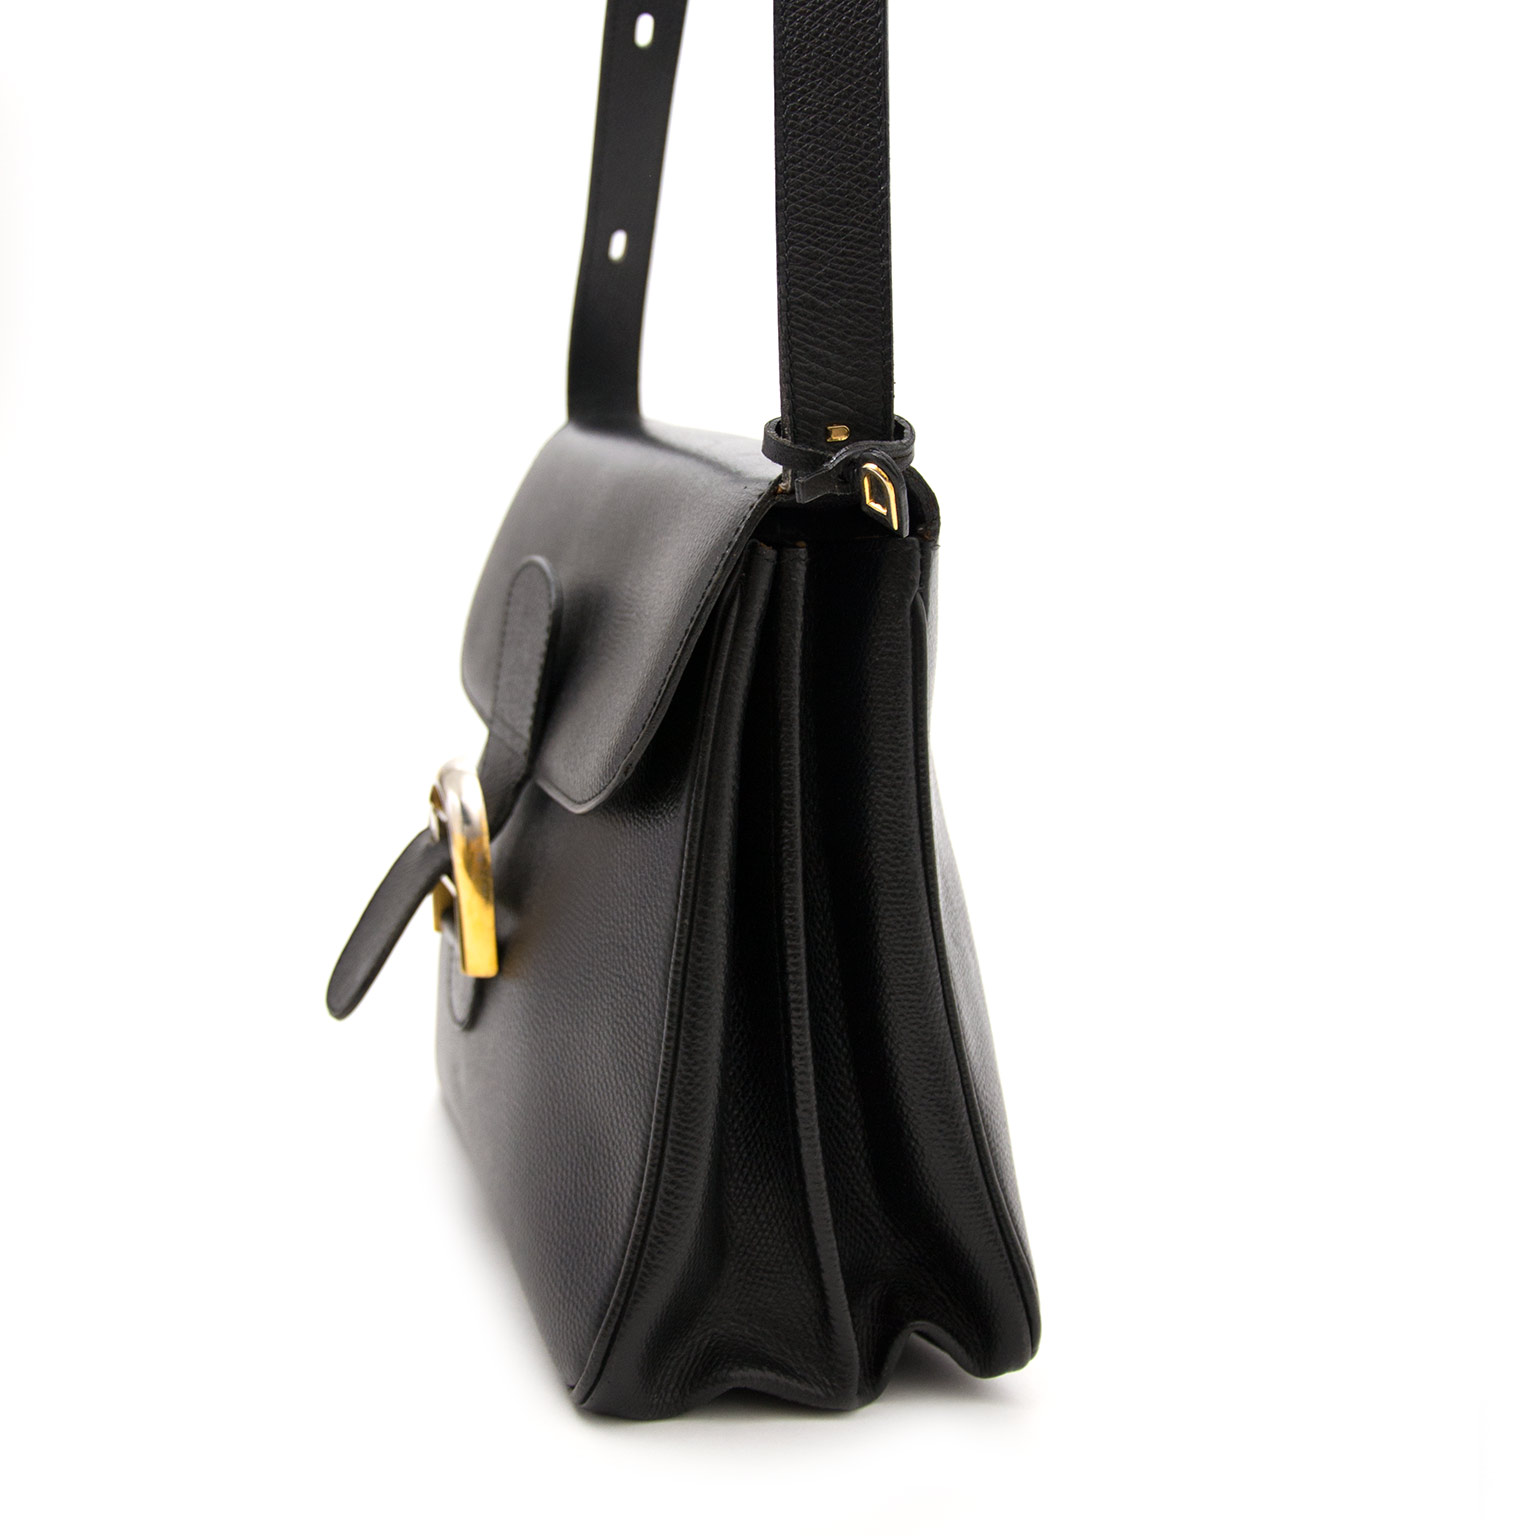 Brillant leather handbag Delvaux Black in Leather - 21932154